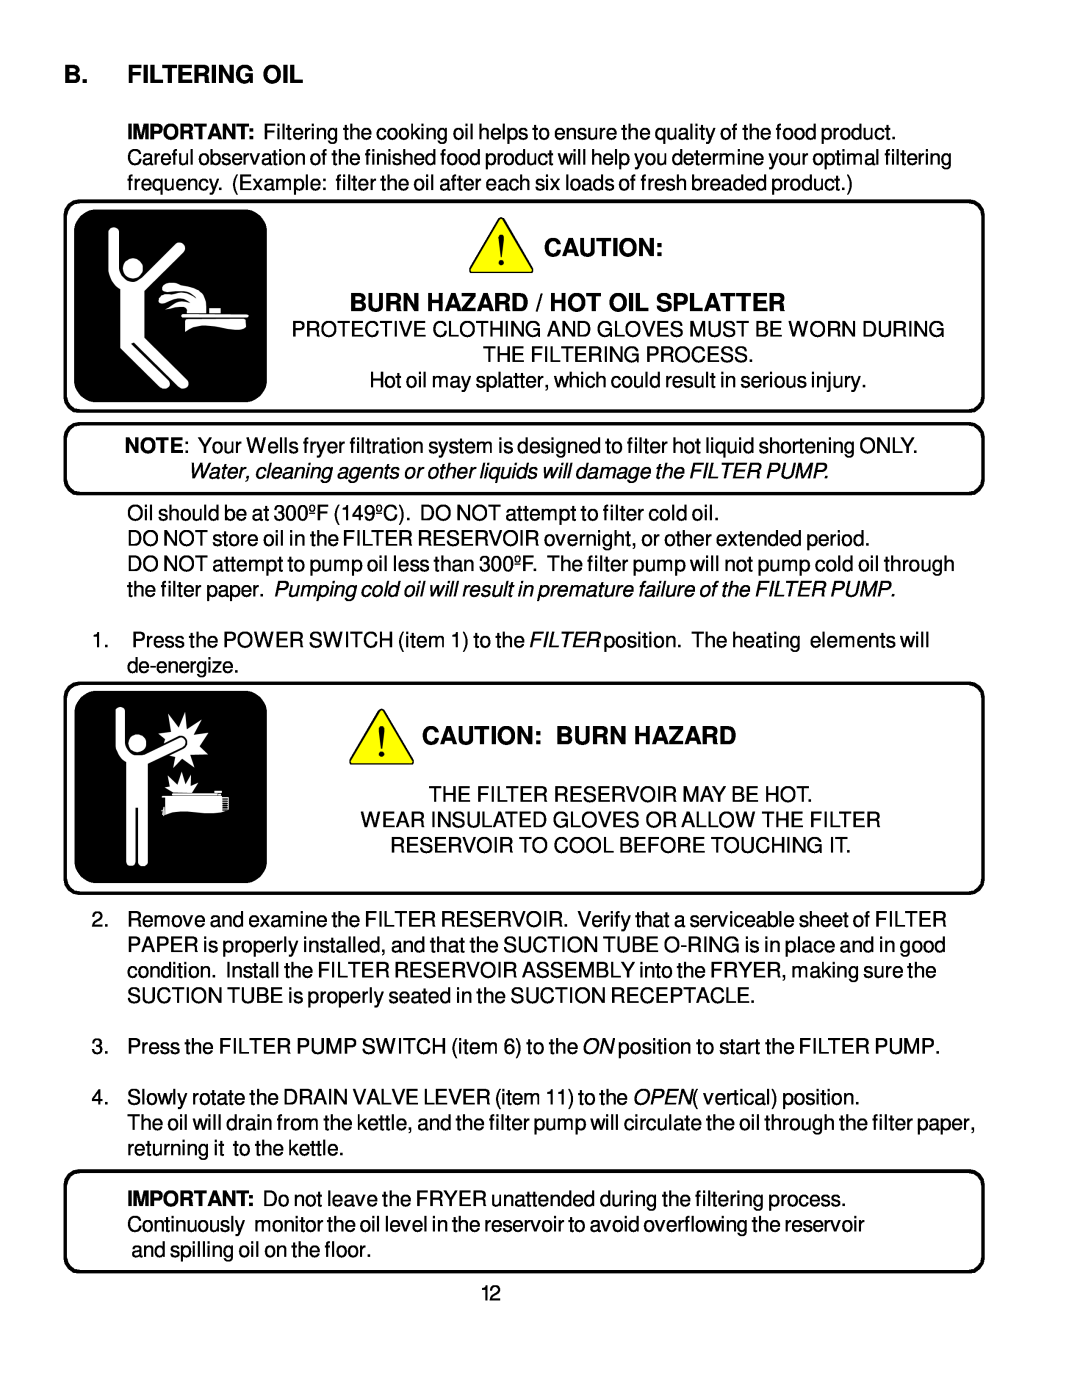 Bloomfield WFPE-30F manual B. Filtering Oil, Caution Burn Hazard, Burn Hazard / Hot Oil Splatter 